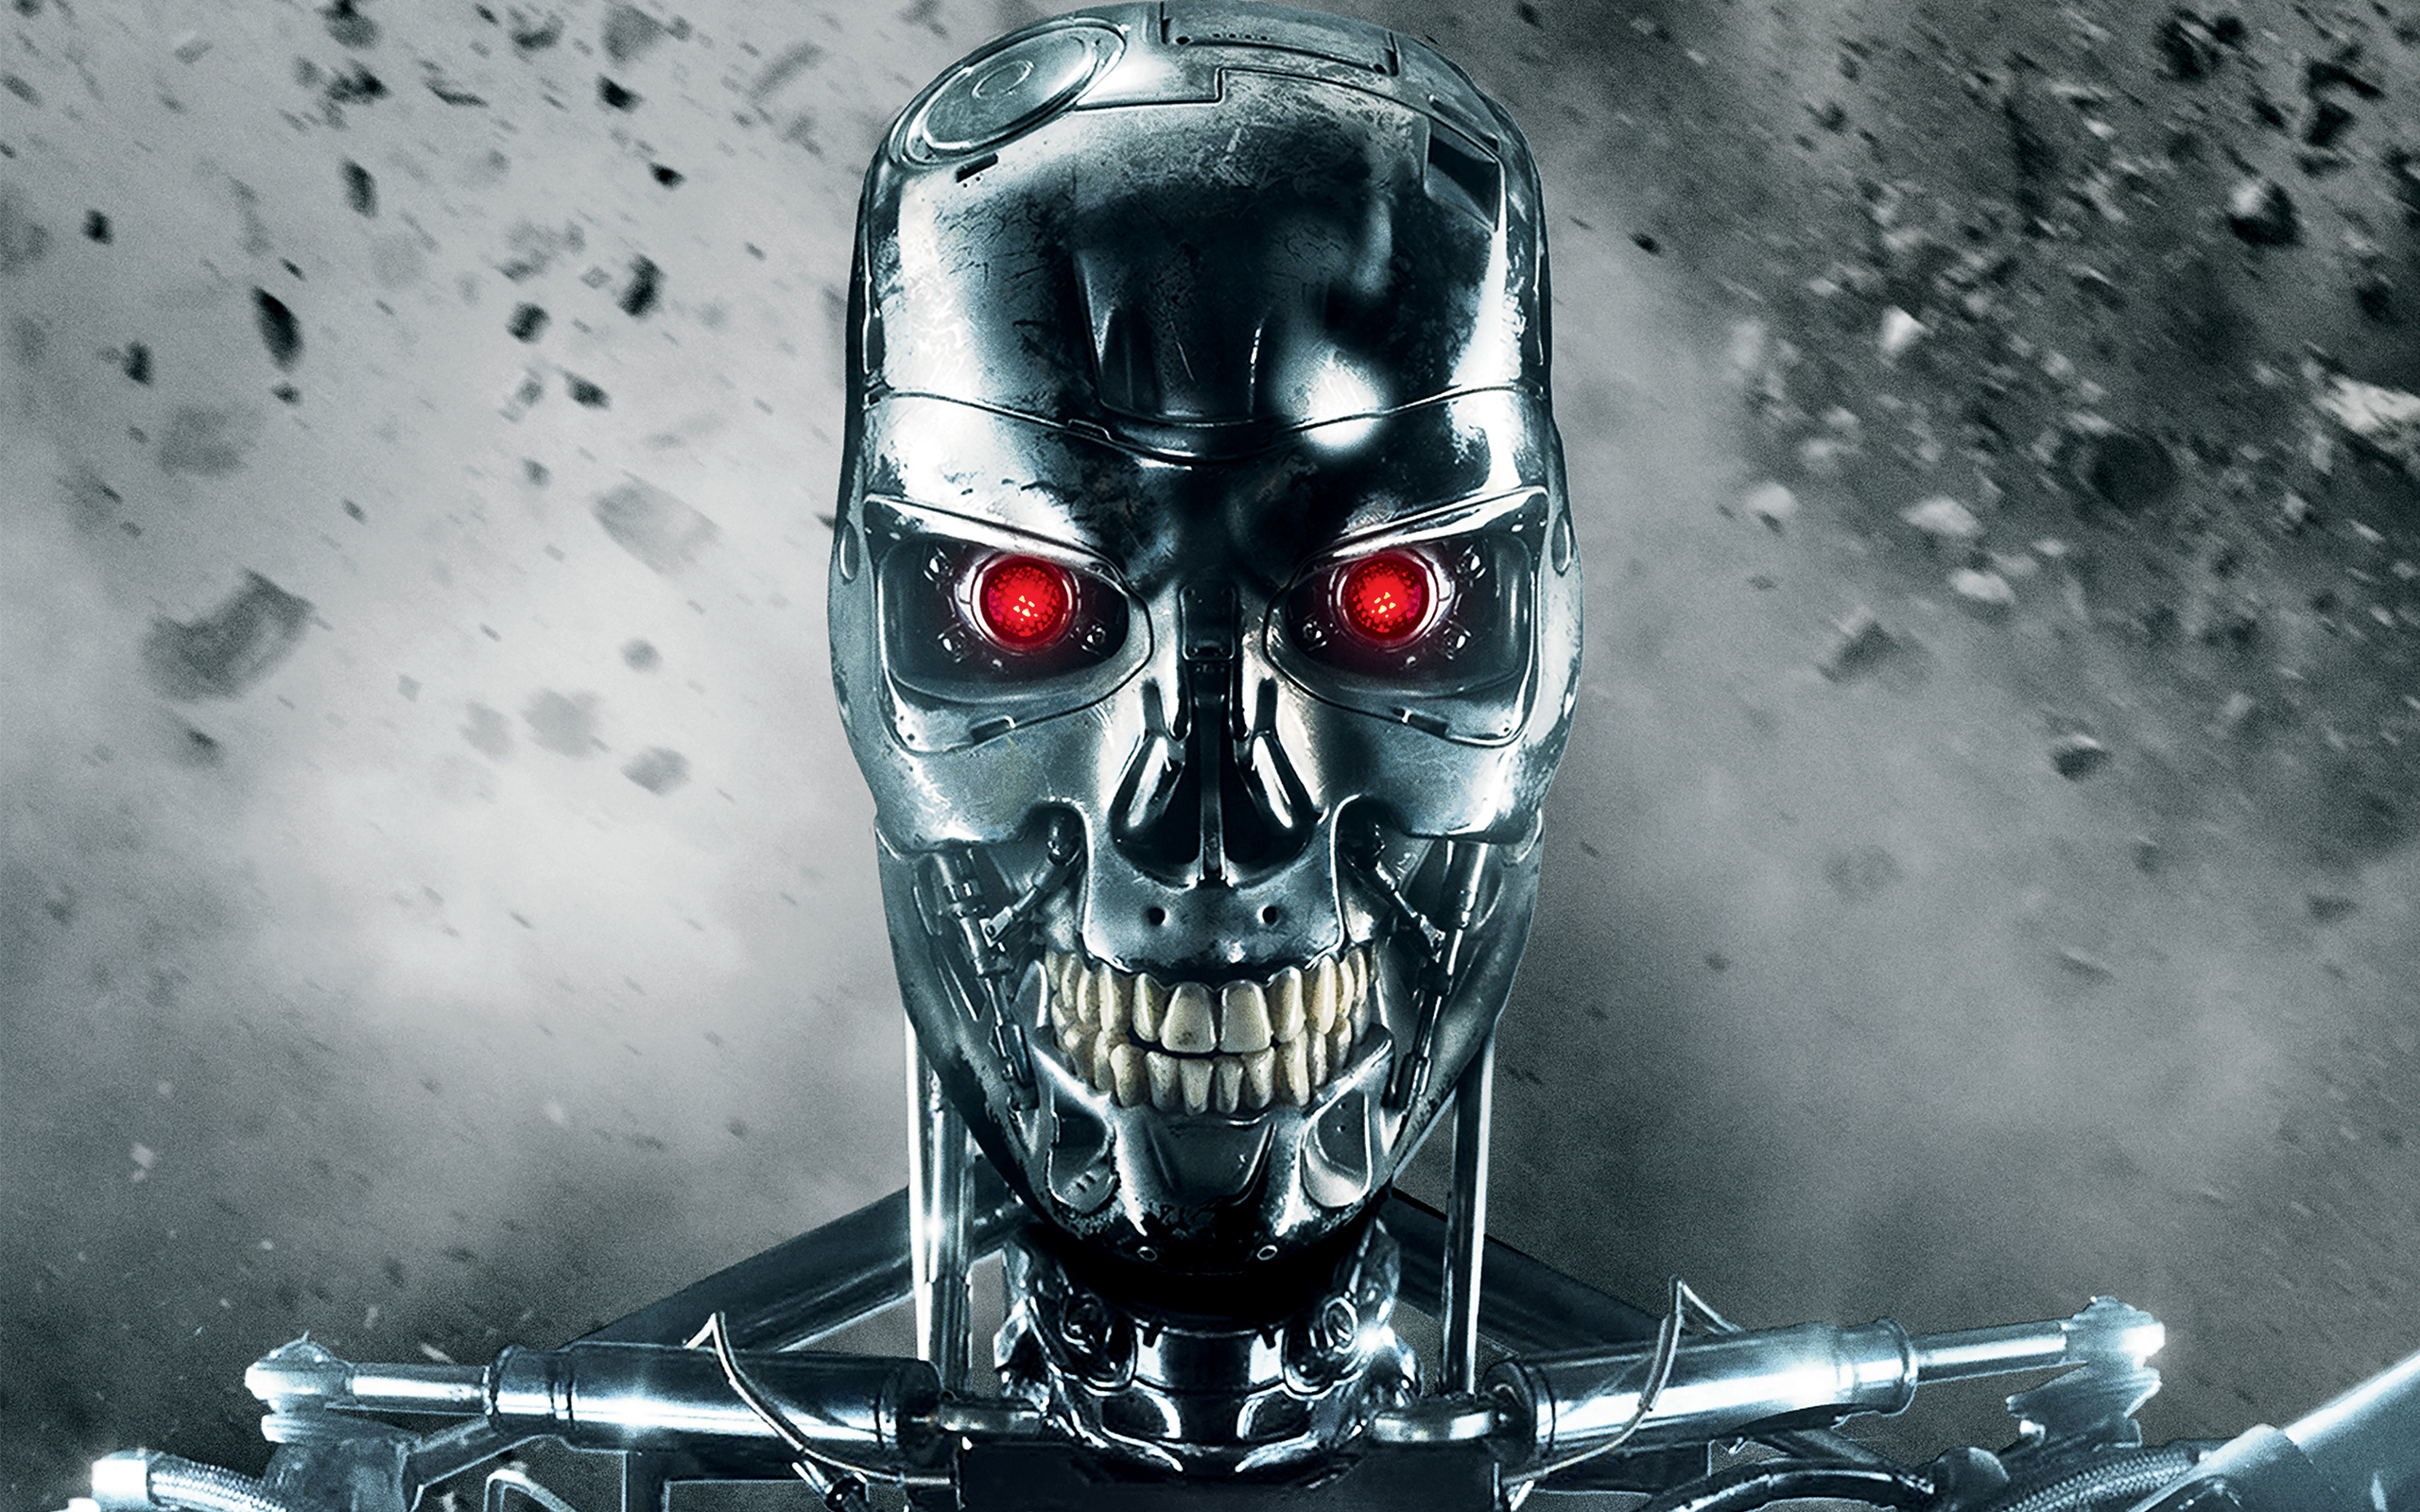 Terminator Backgrounds, Compatible - PC, Mobile, Gadgets| 2560x1600 px